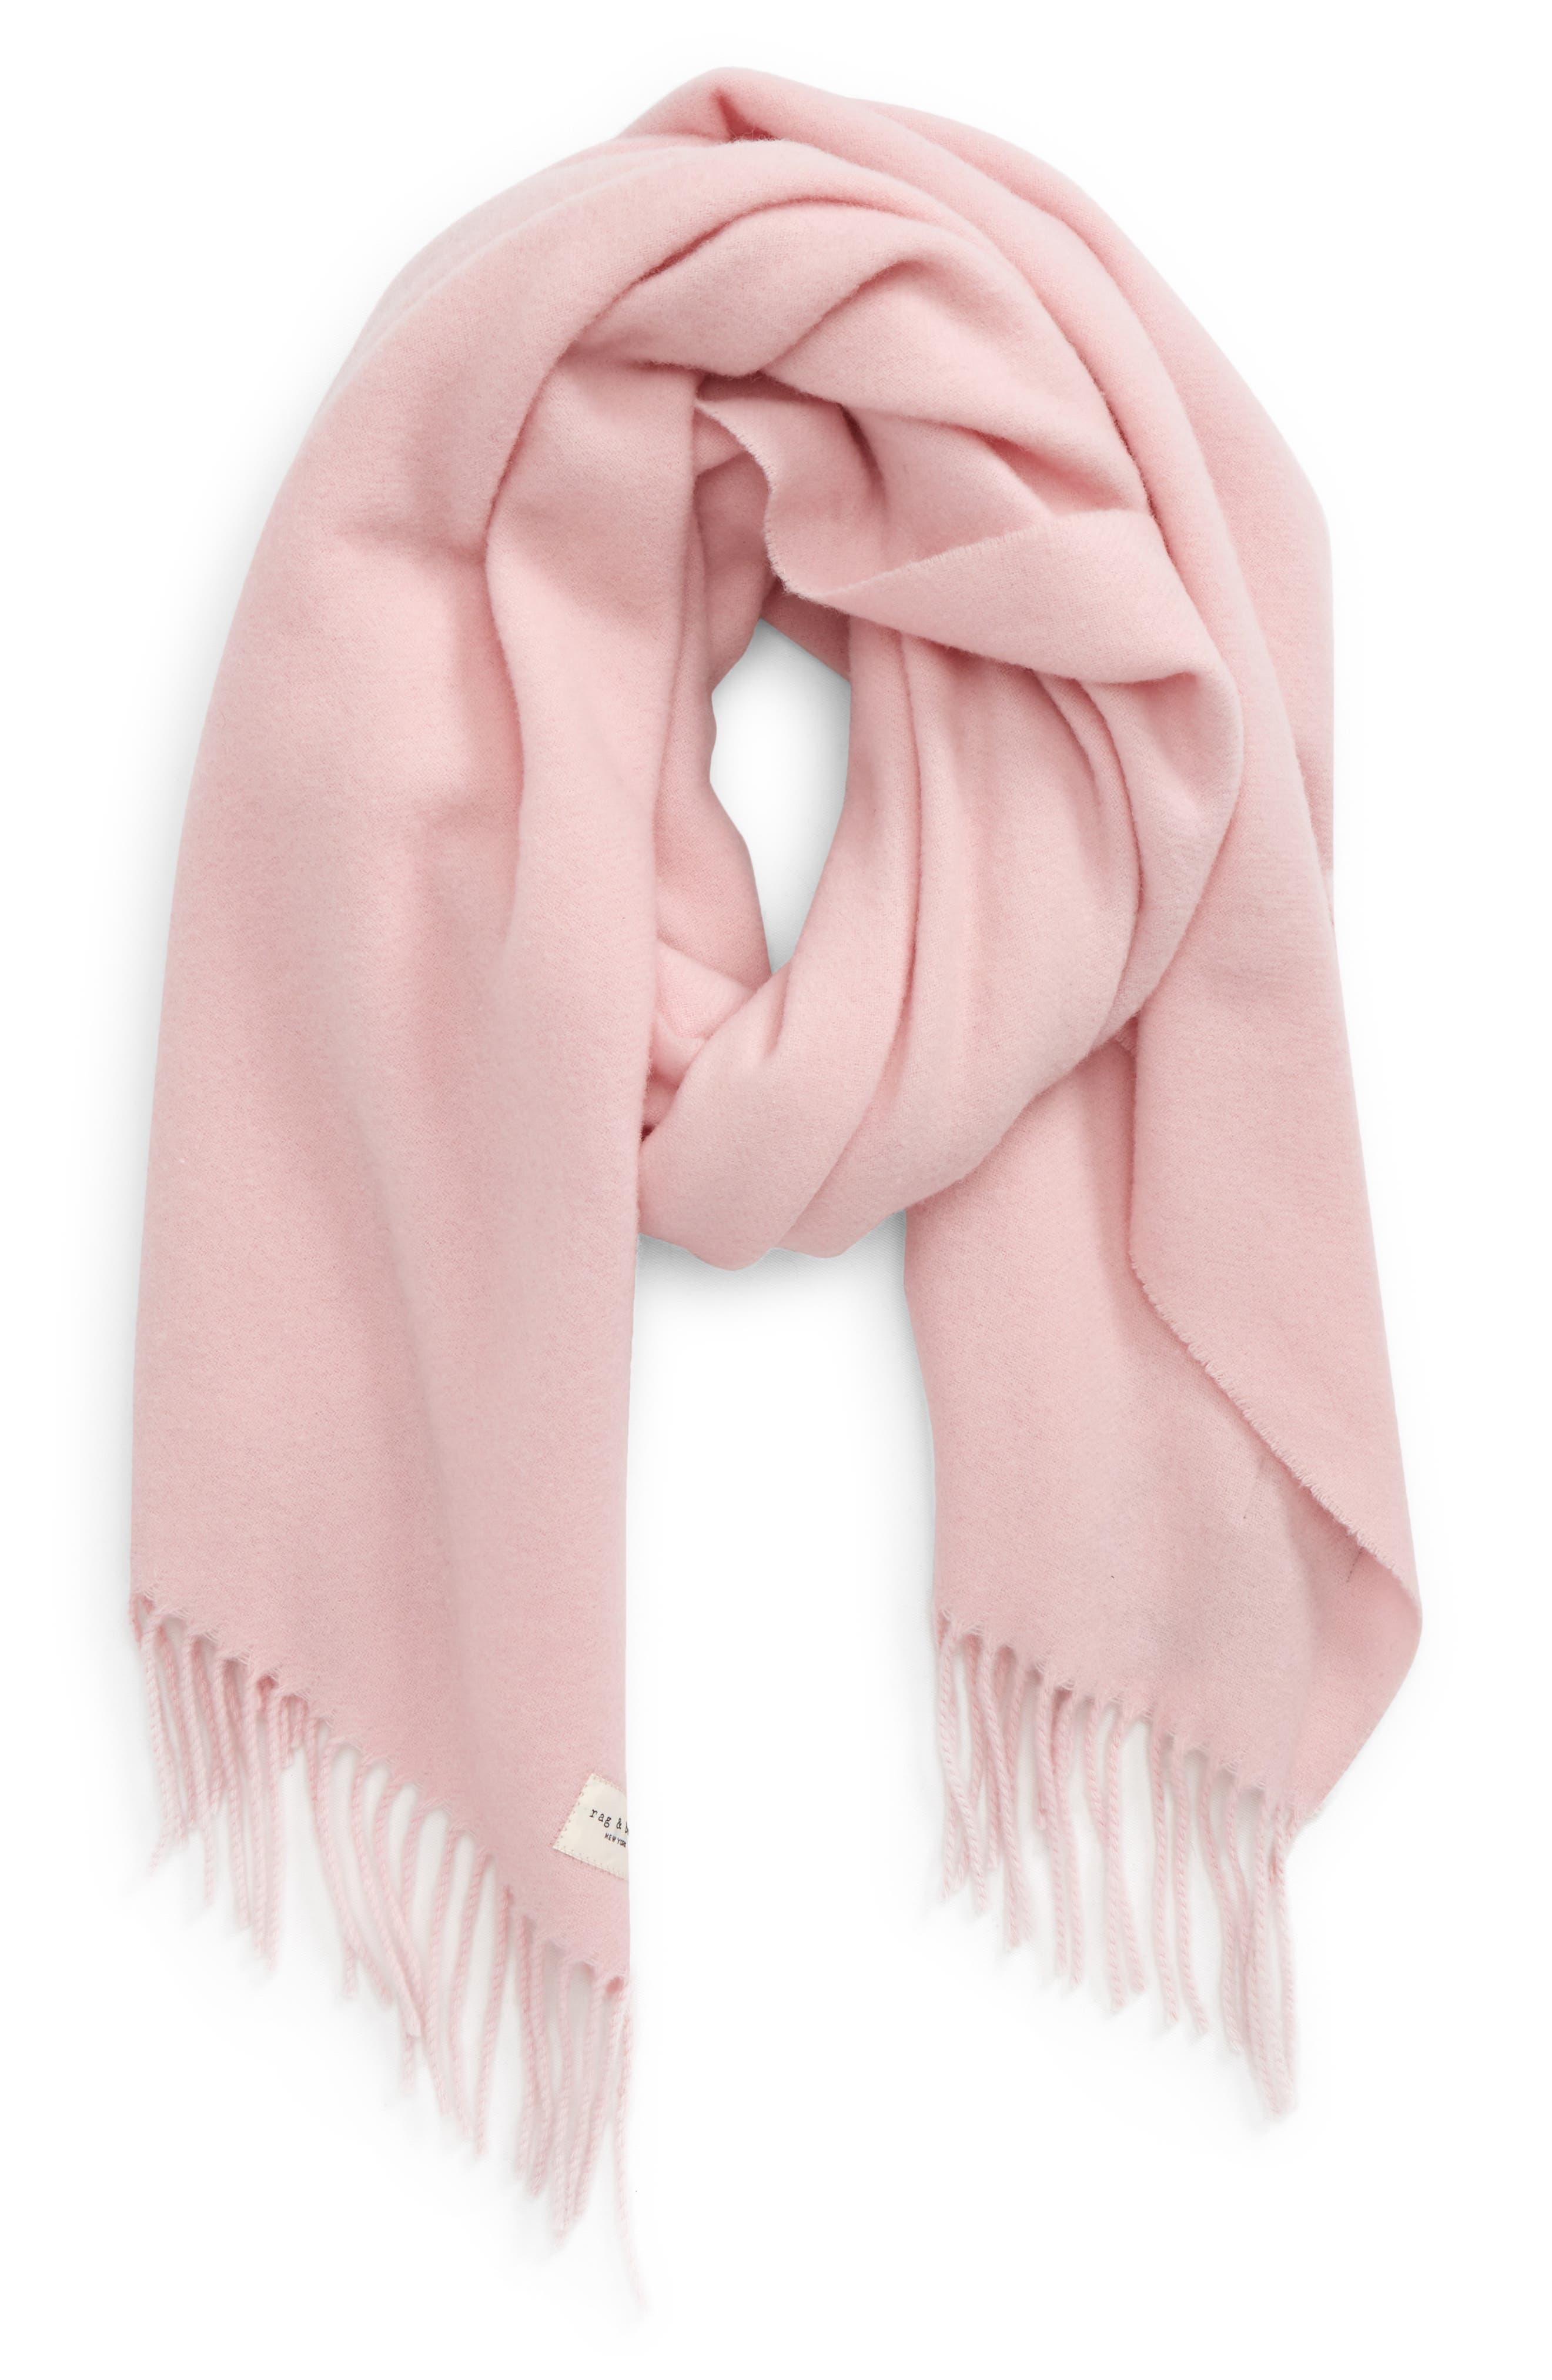 New women's scarf scarves shawl wrap chiffon small skull print 6 colors 